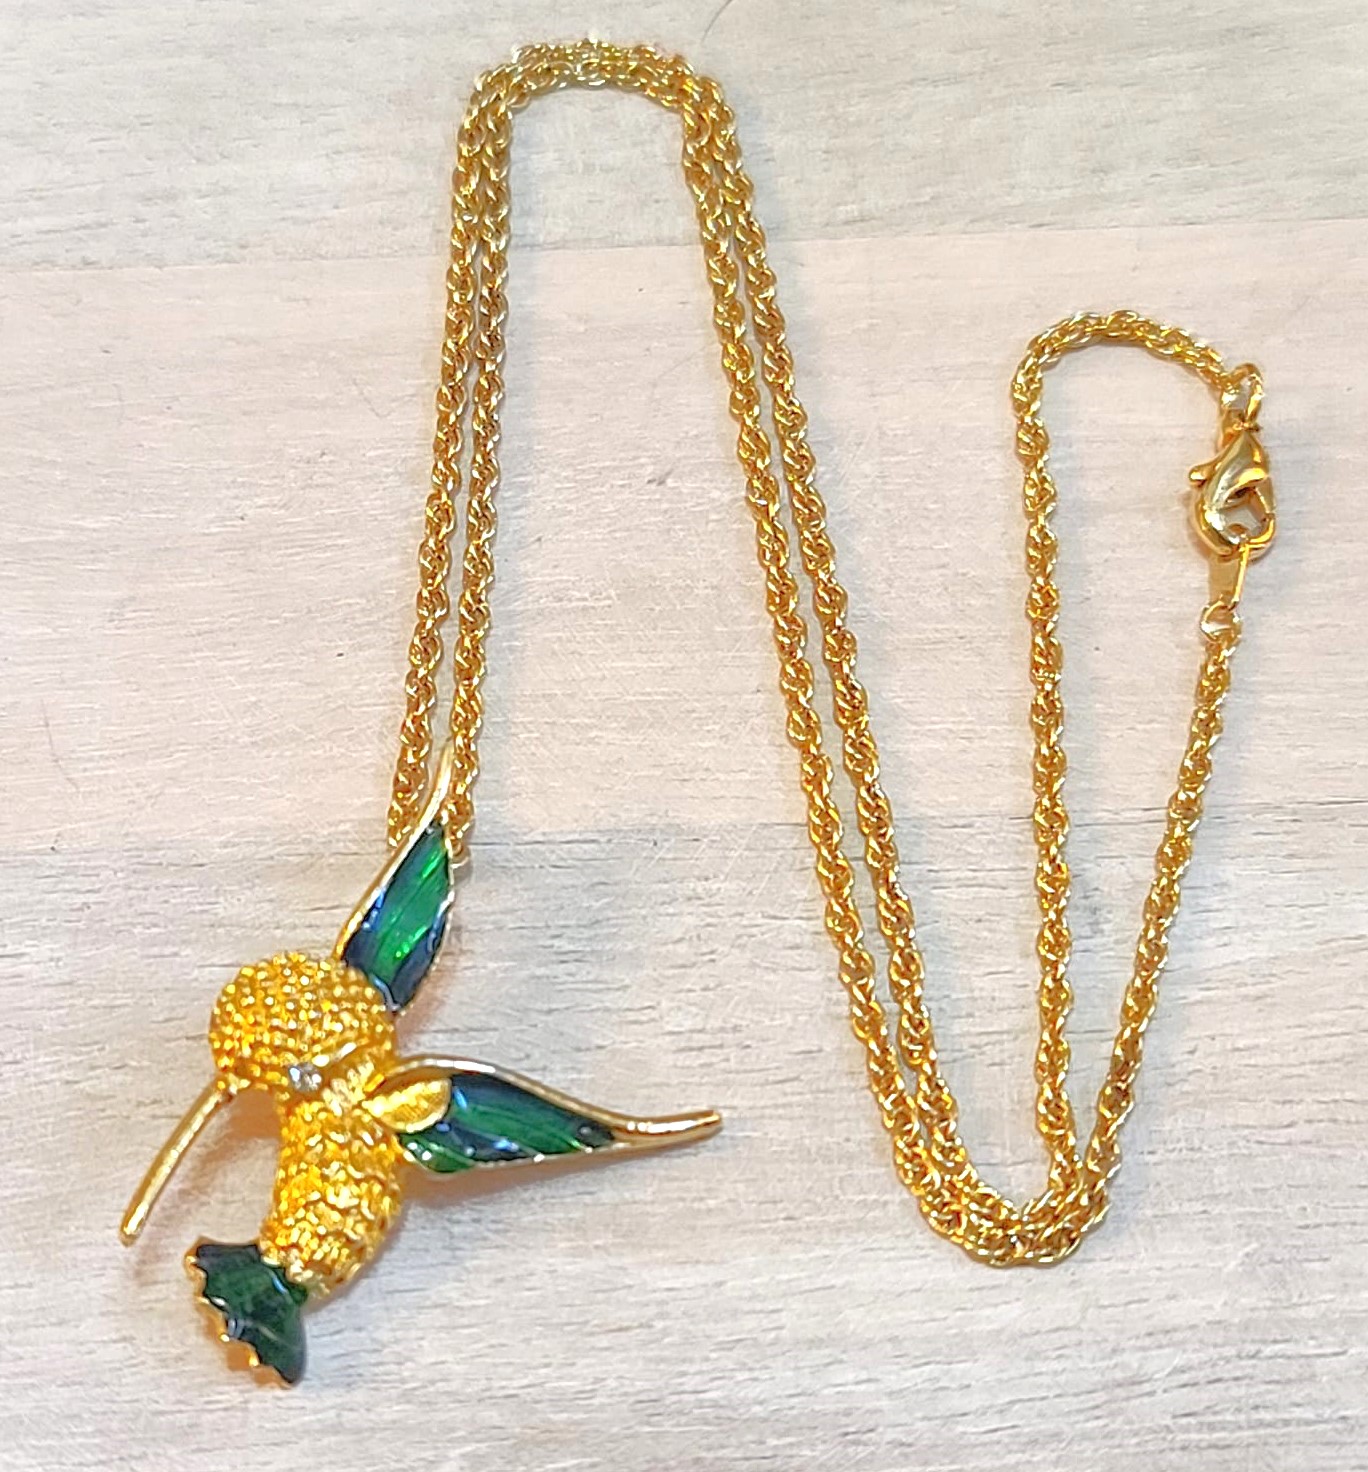 Hummingbird pendant necklace with chain, vintage enamel hummingbird